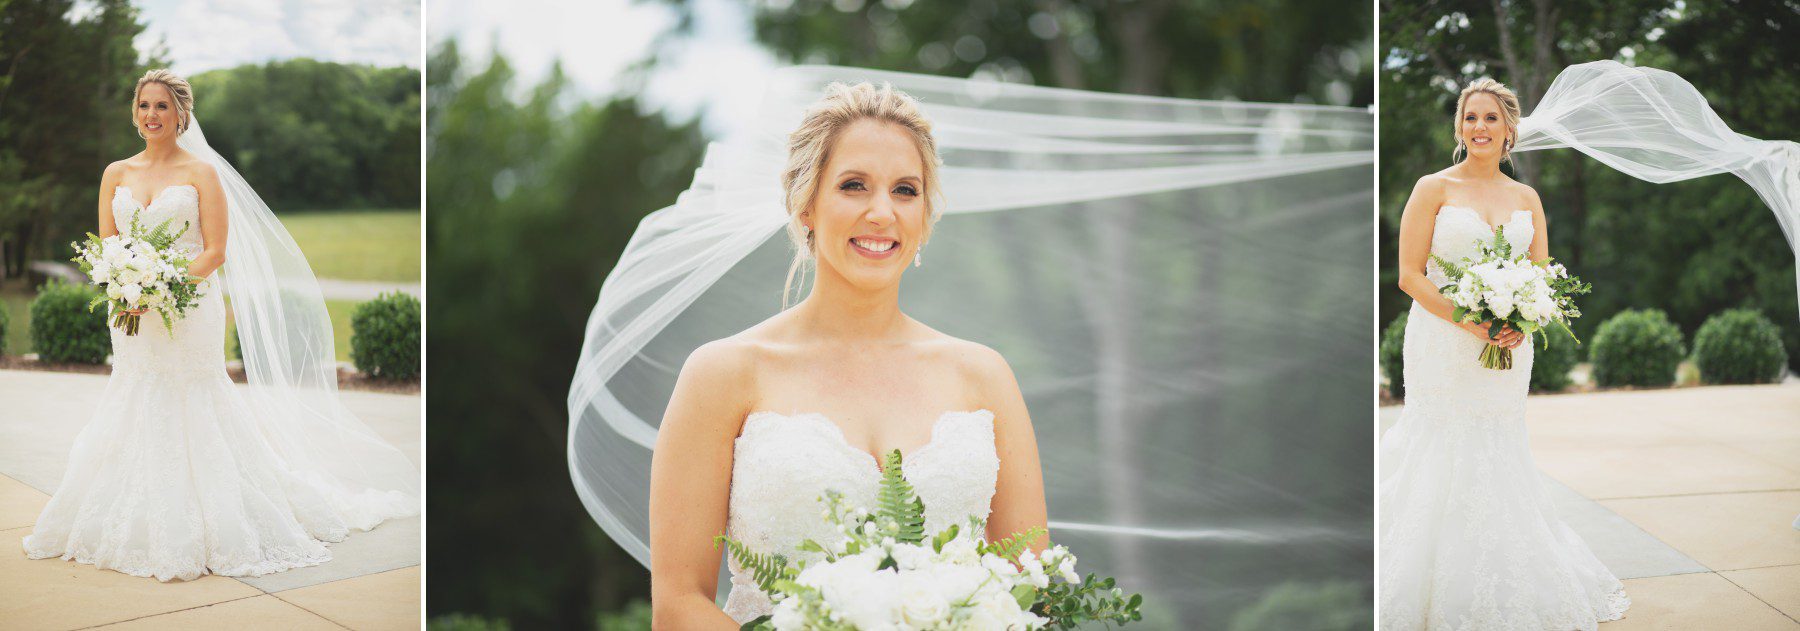 Nashville wedding photographer bridal portrait at Graystone Quarry